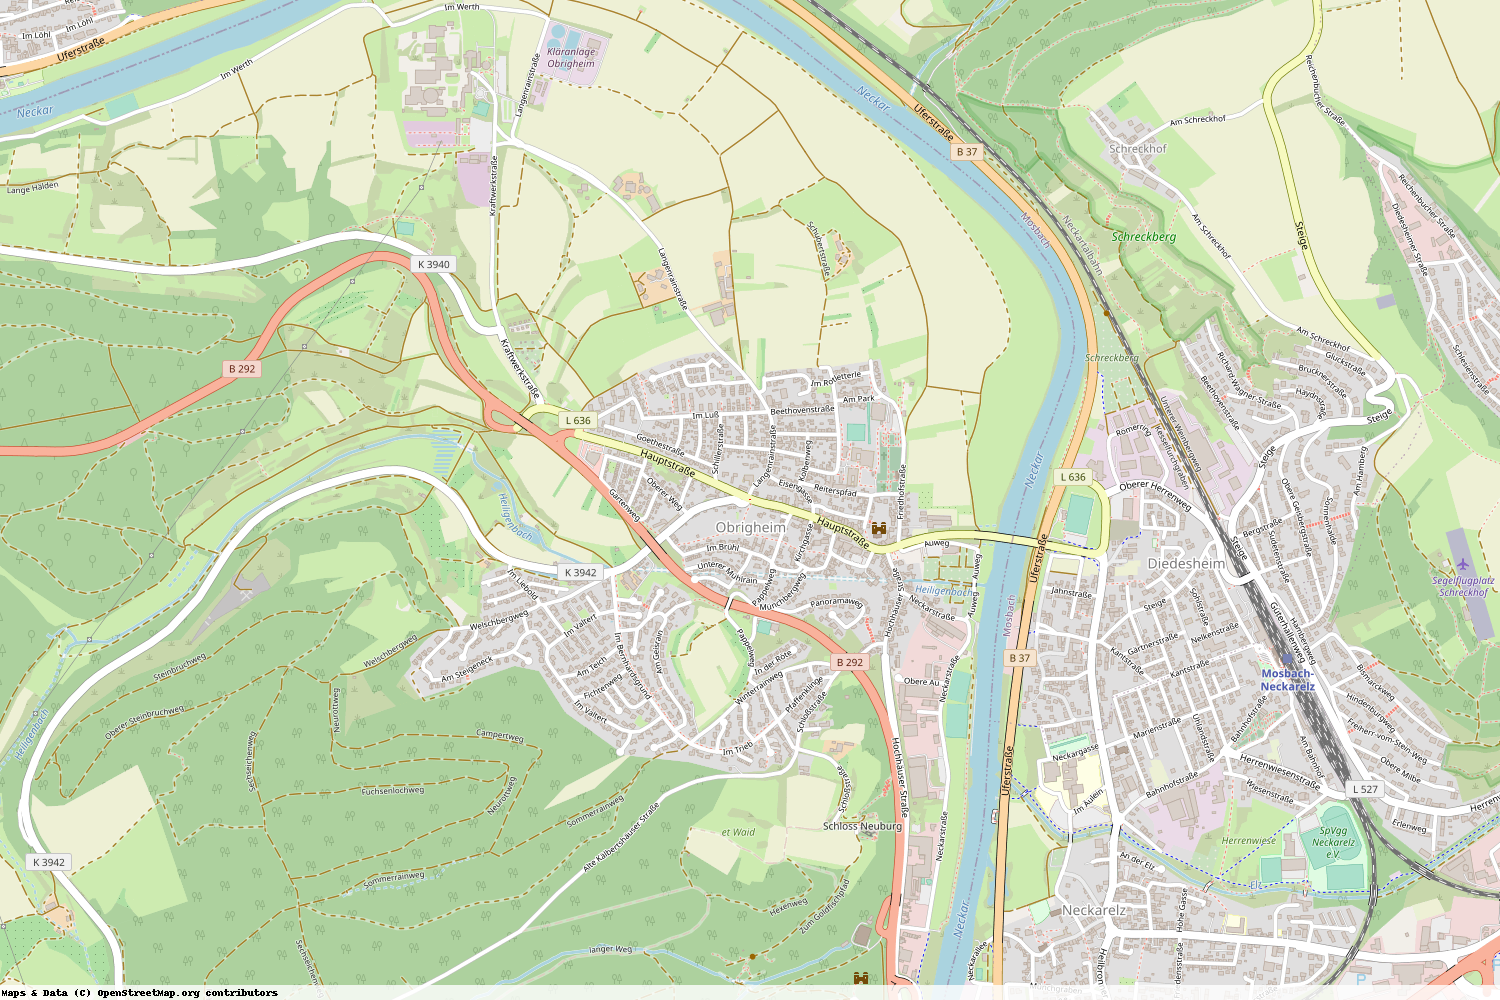 Ist gerade Stromausfall in Baden-Württemberg - Neckar-Odenwald-Kreis - Obrigheim?